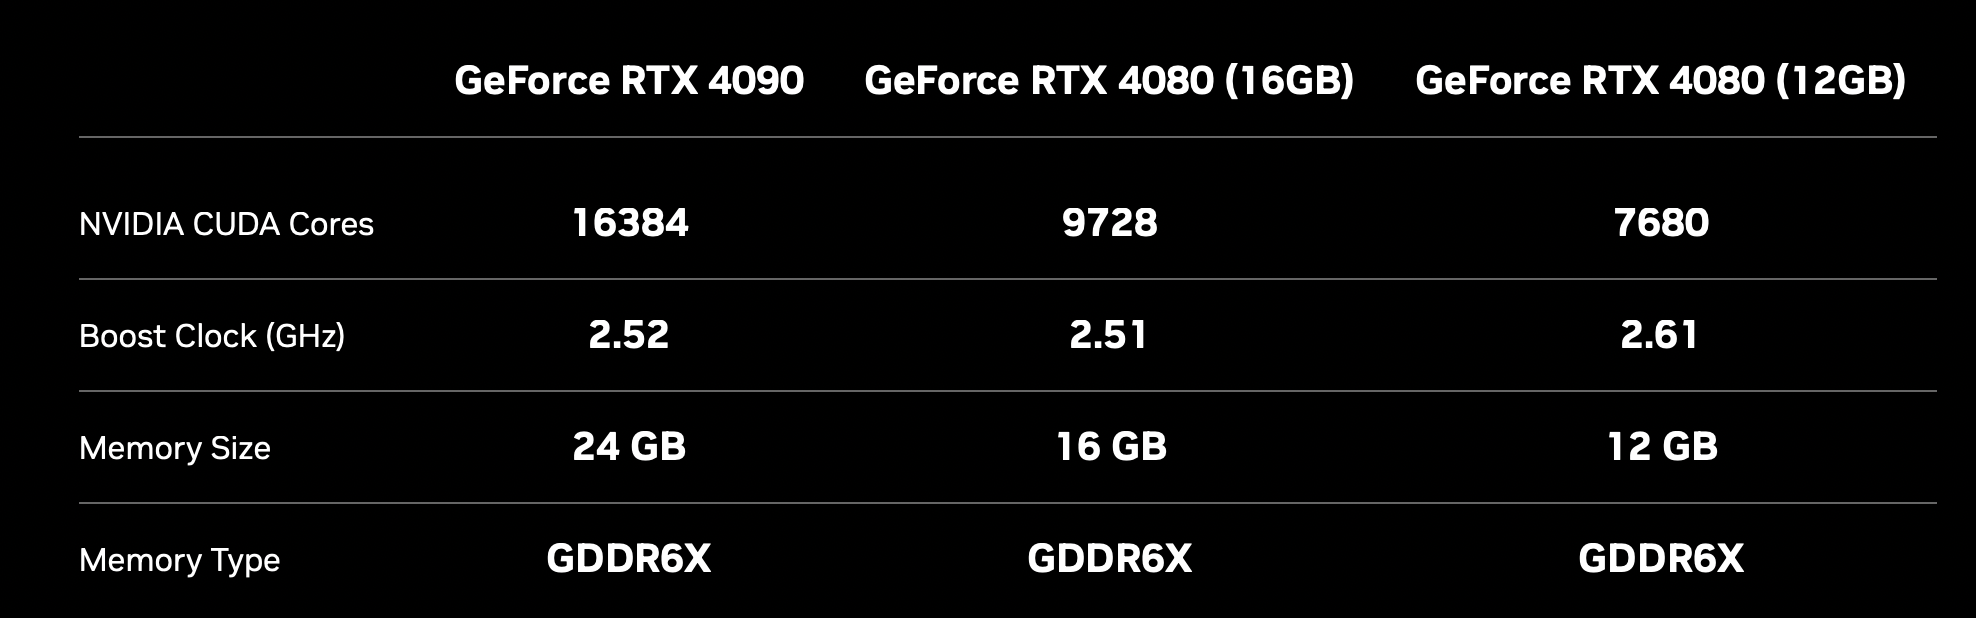 NVIDIA "UnlaUnts" RTX 4080 12GB GPU